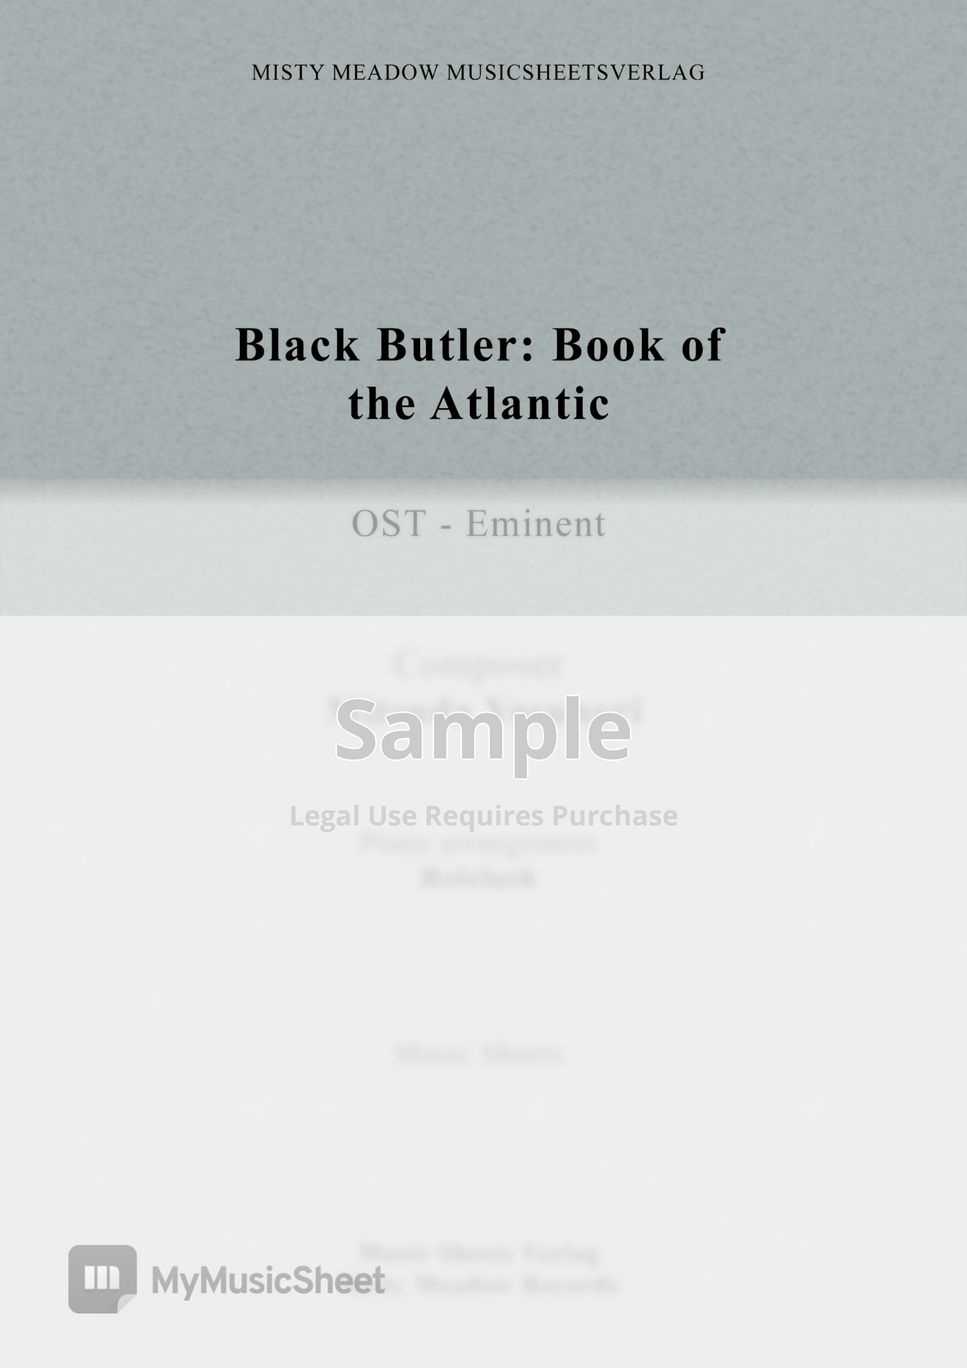 Mitsuda Yasunori - Black Butler book of Atlantic OST - Eminent by Rolelush